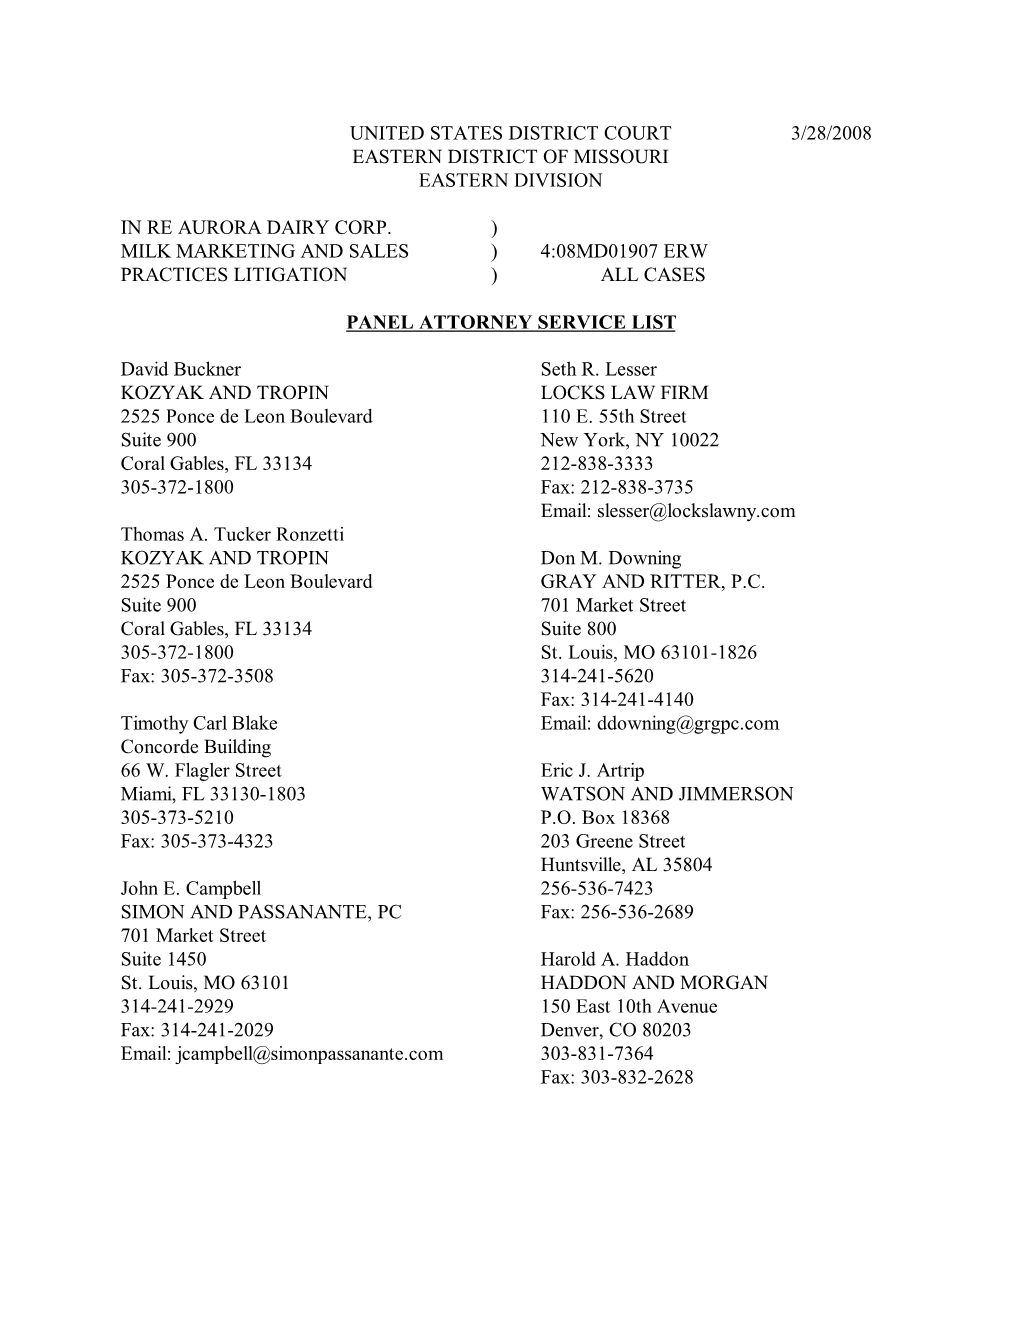 Panel Attorney Service List